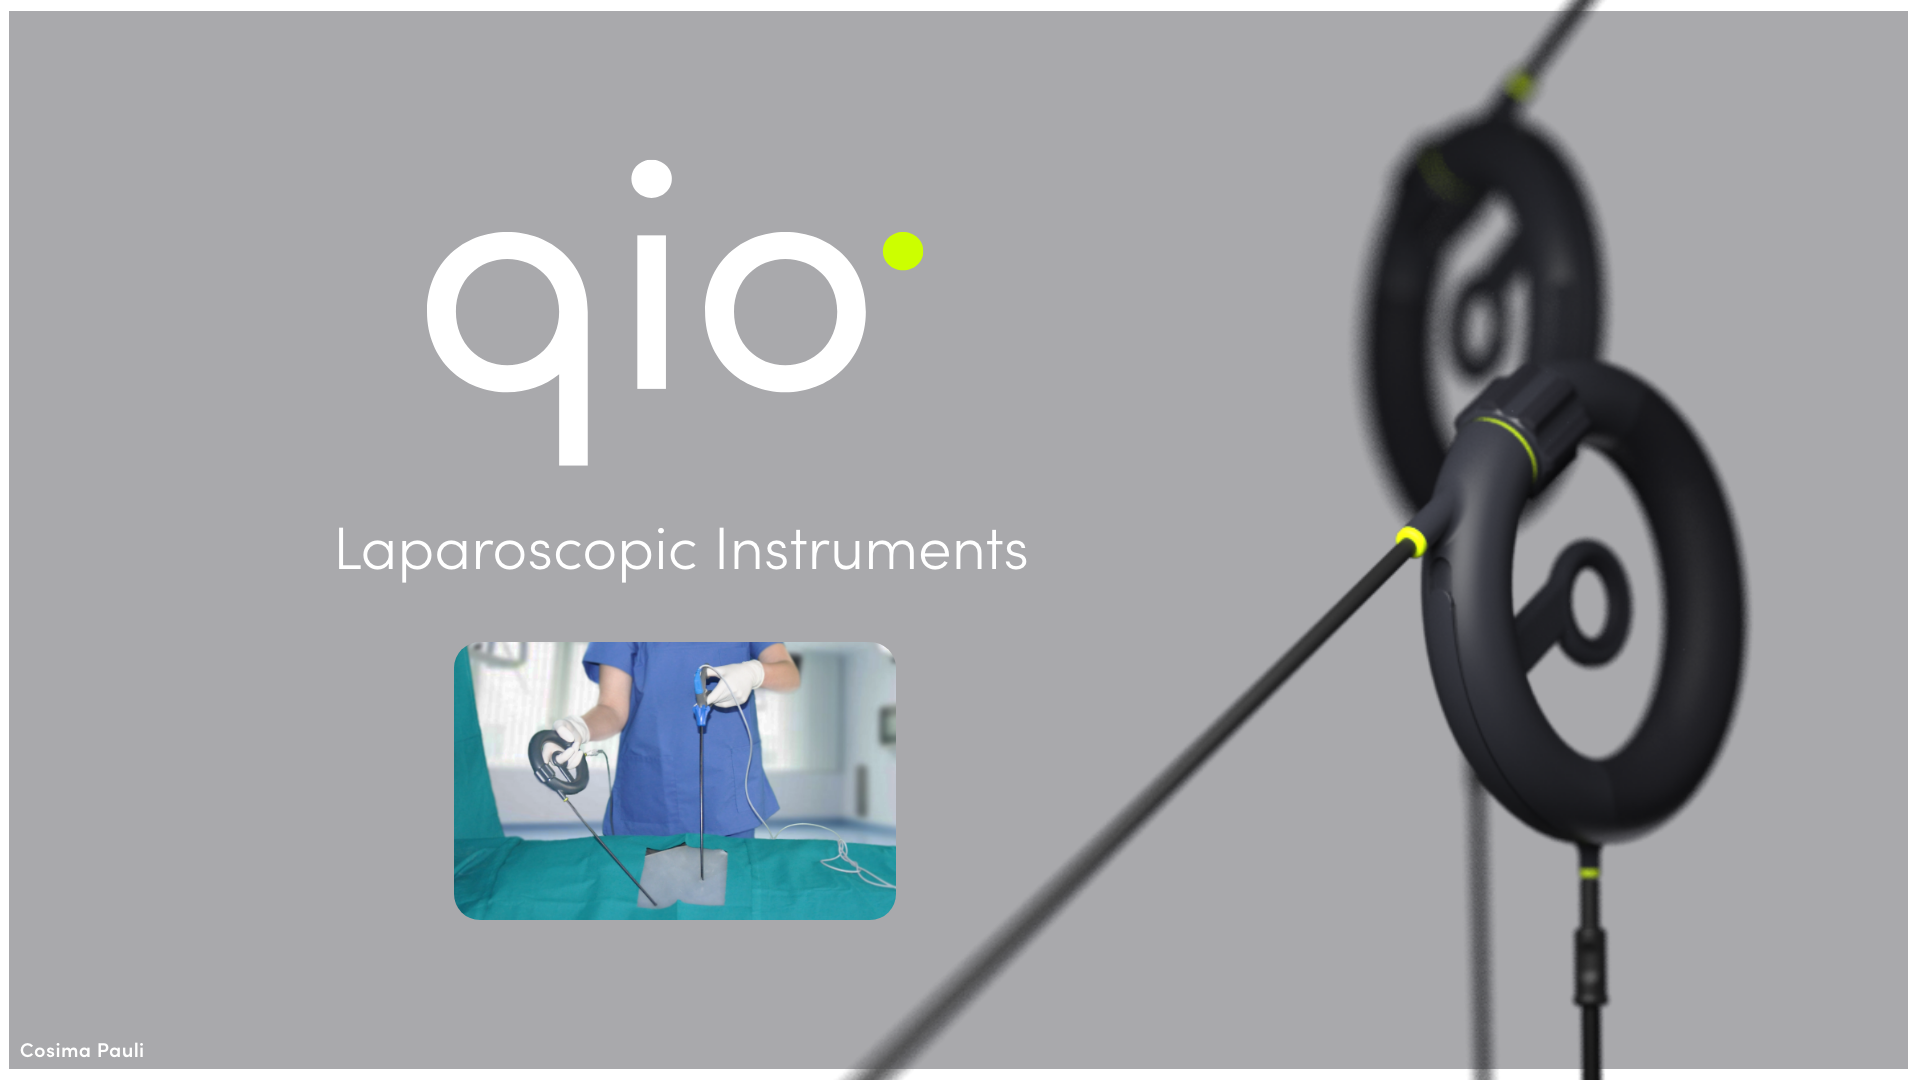 qio – the next generation of laparoscopic instruments